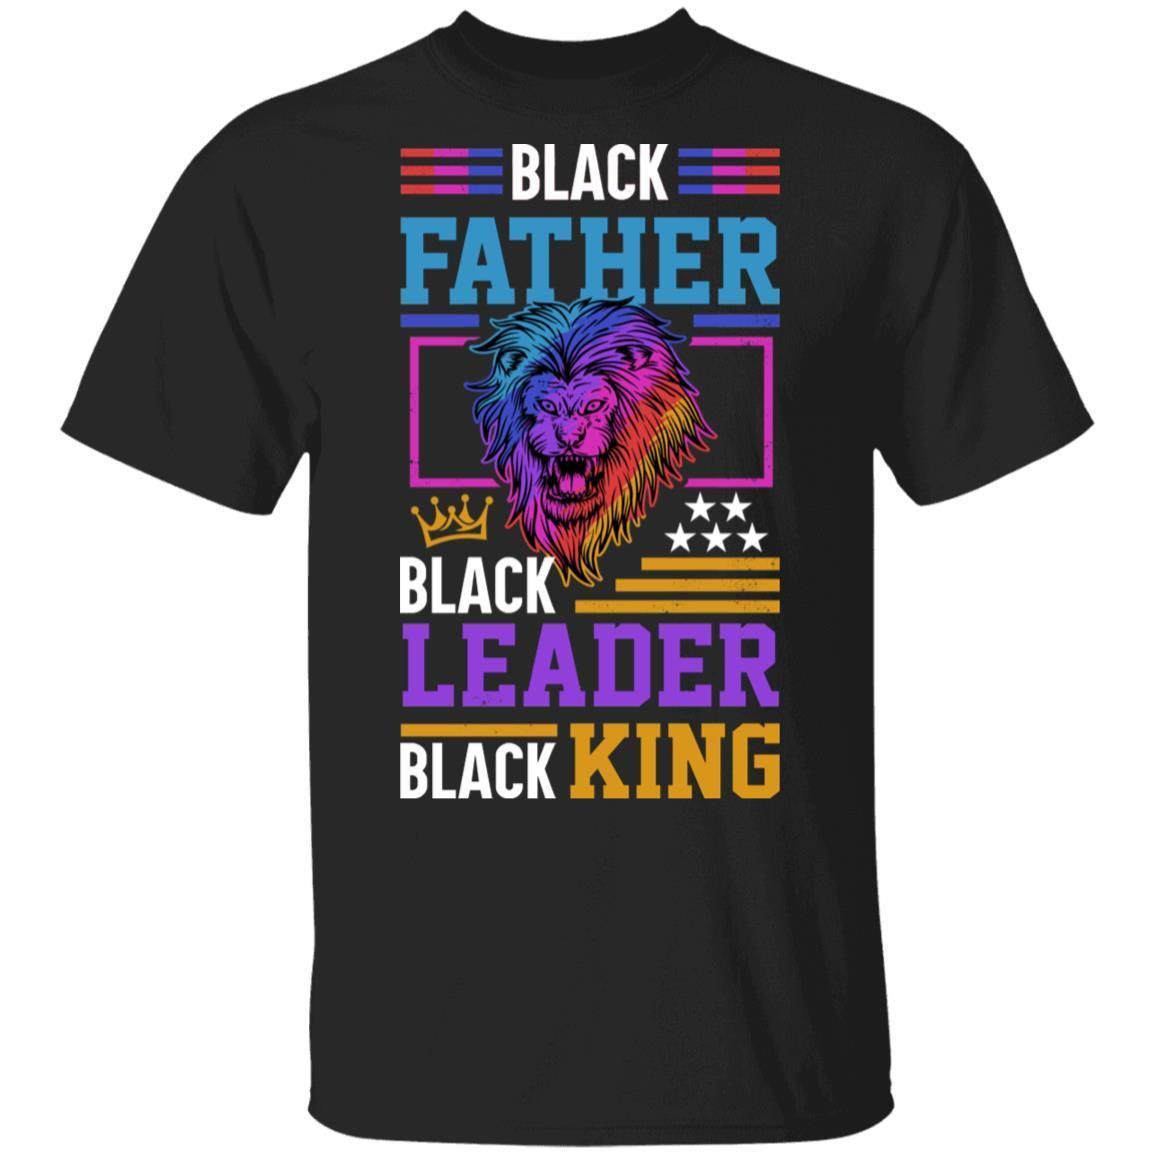 Black Leader Black King T-Shirt